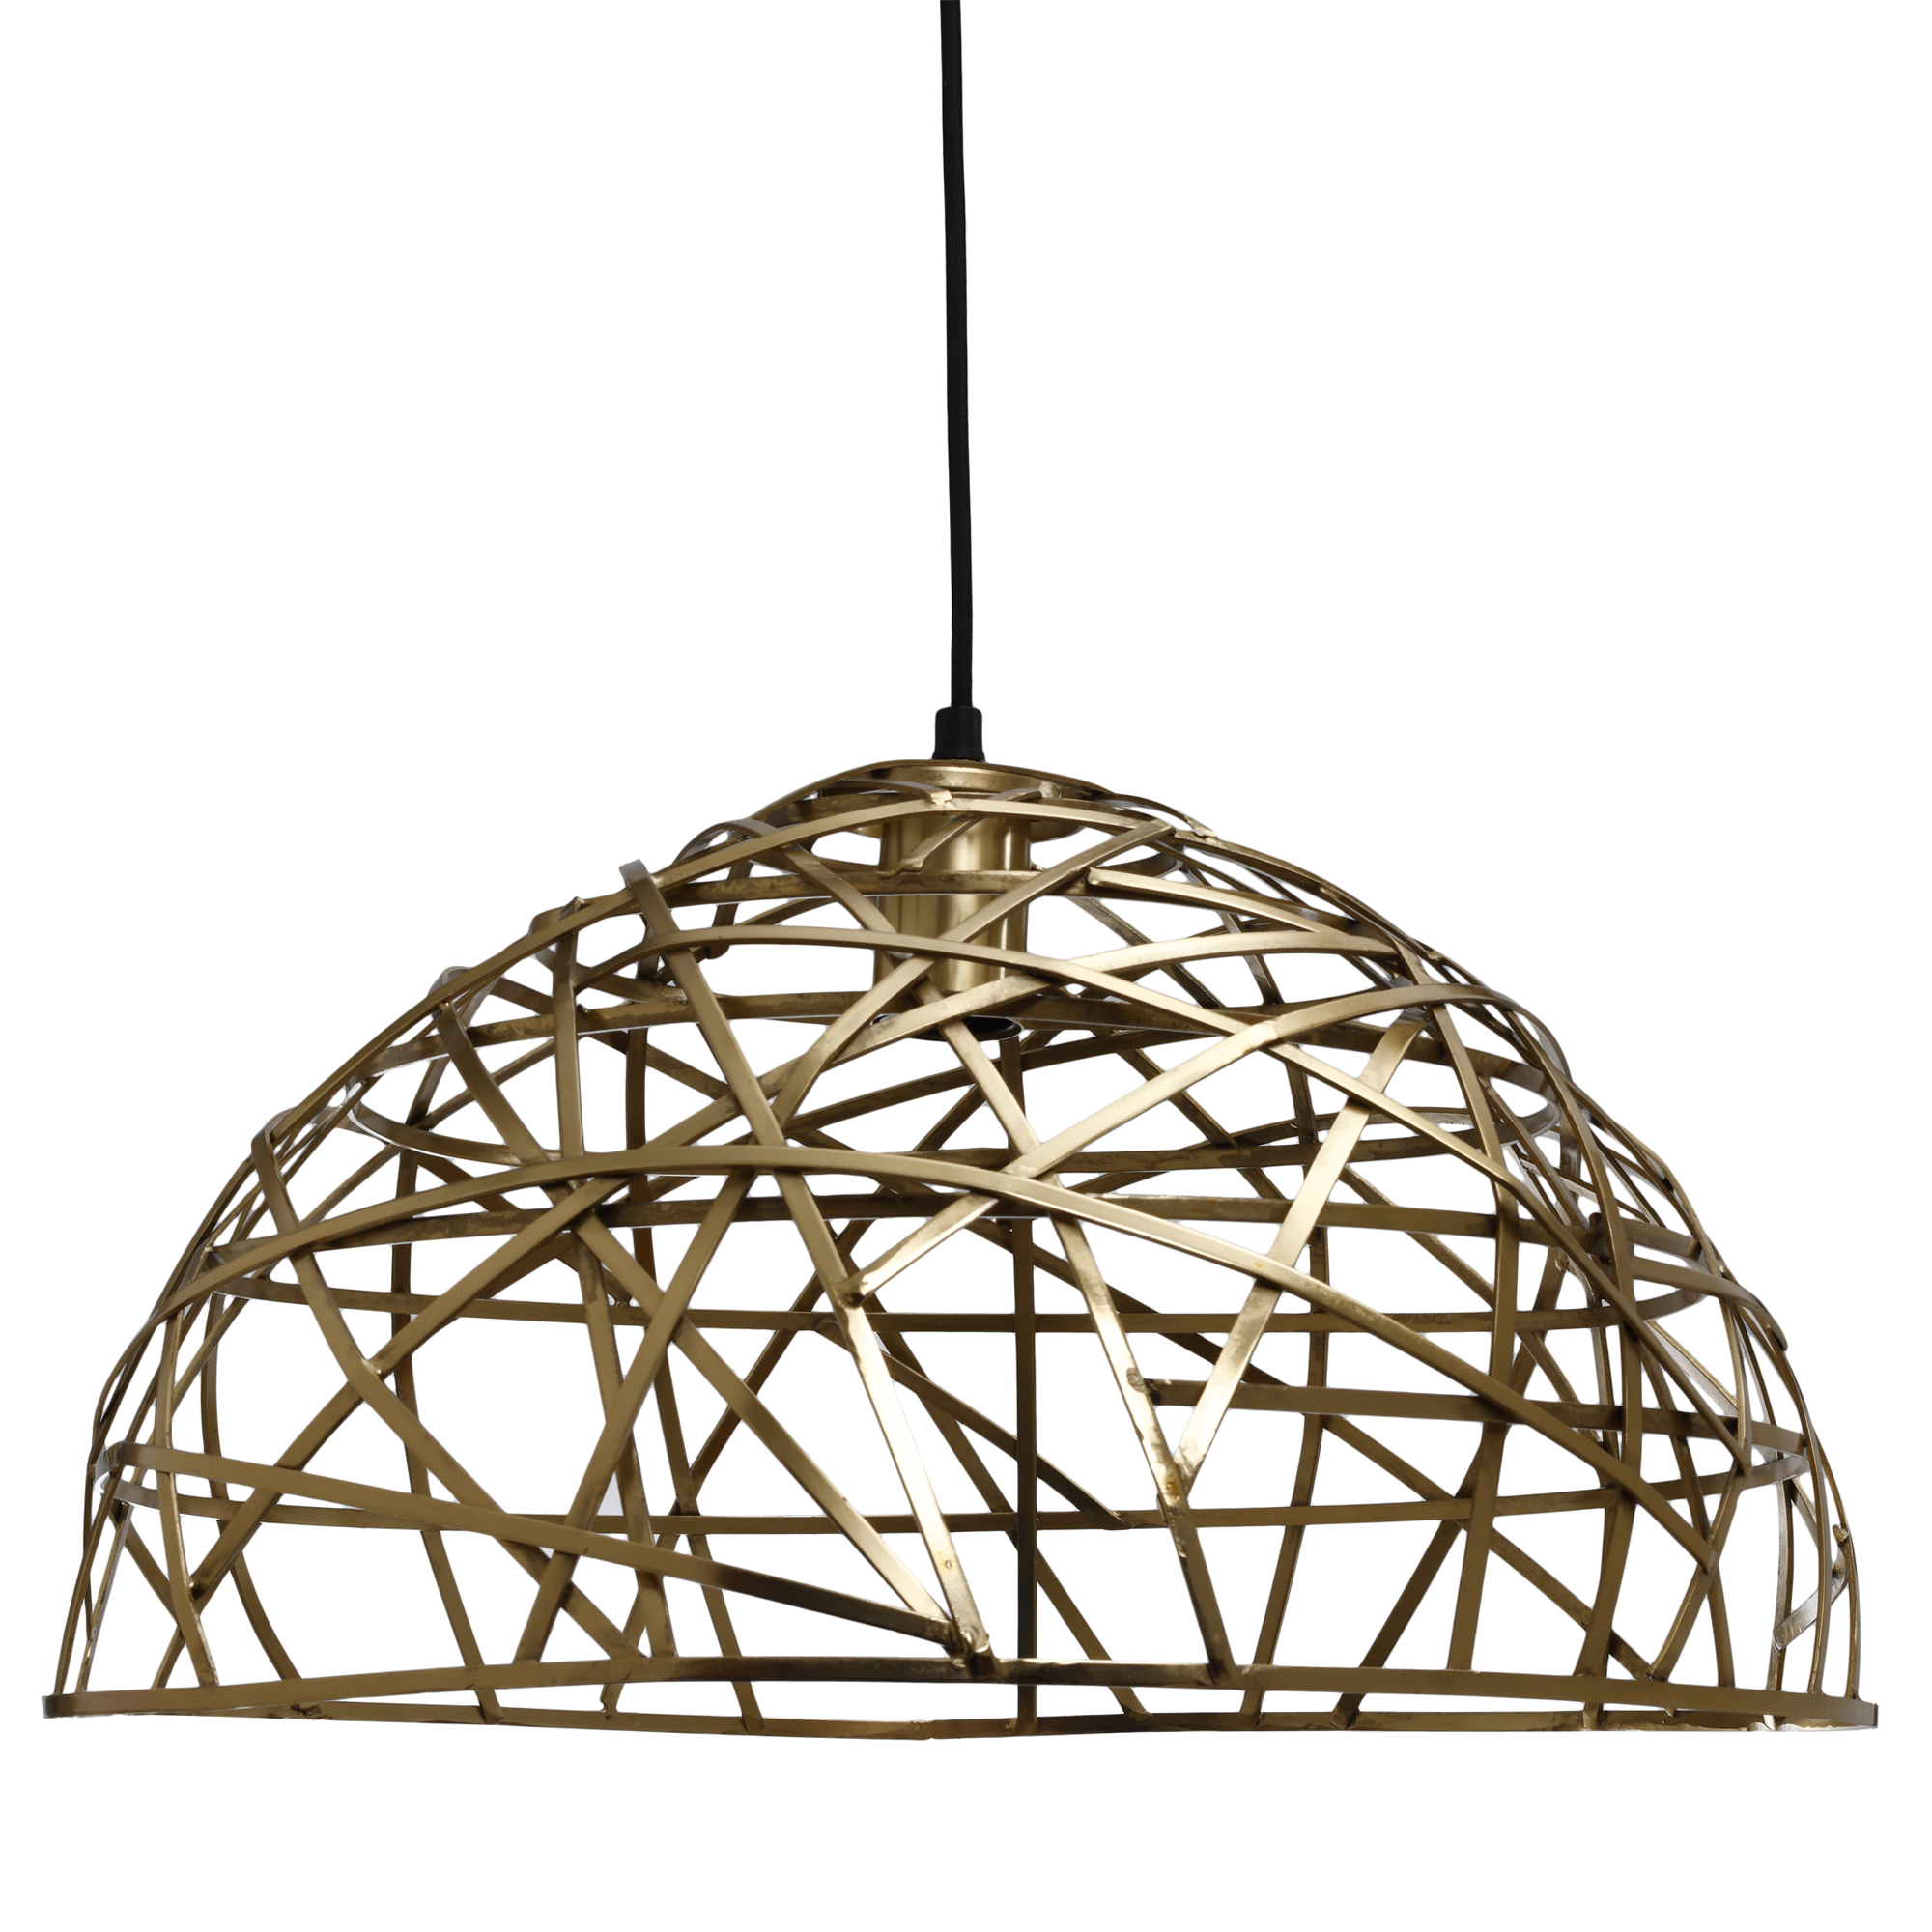 Castor Brass iron hanging lamp geometric design